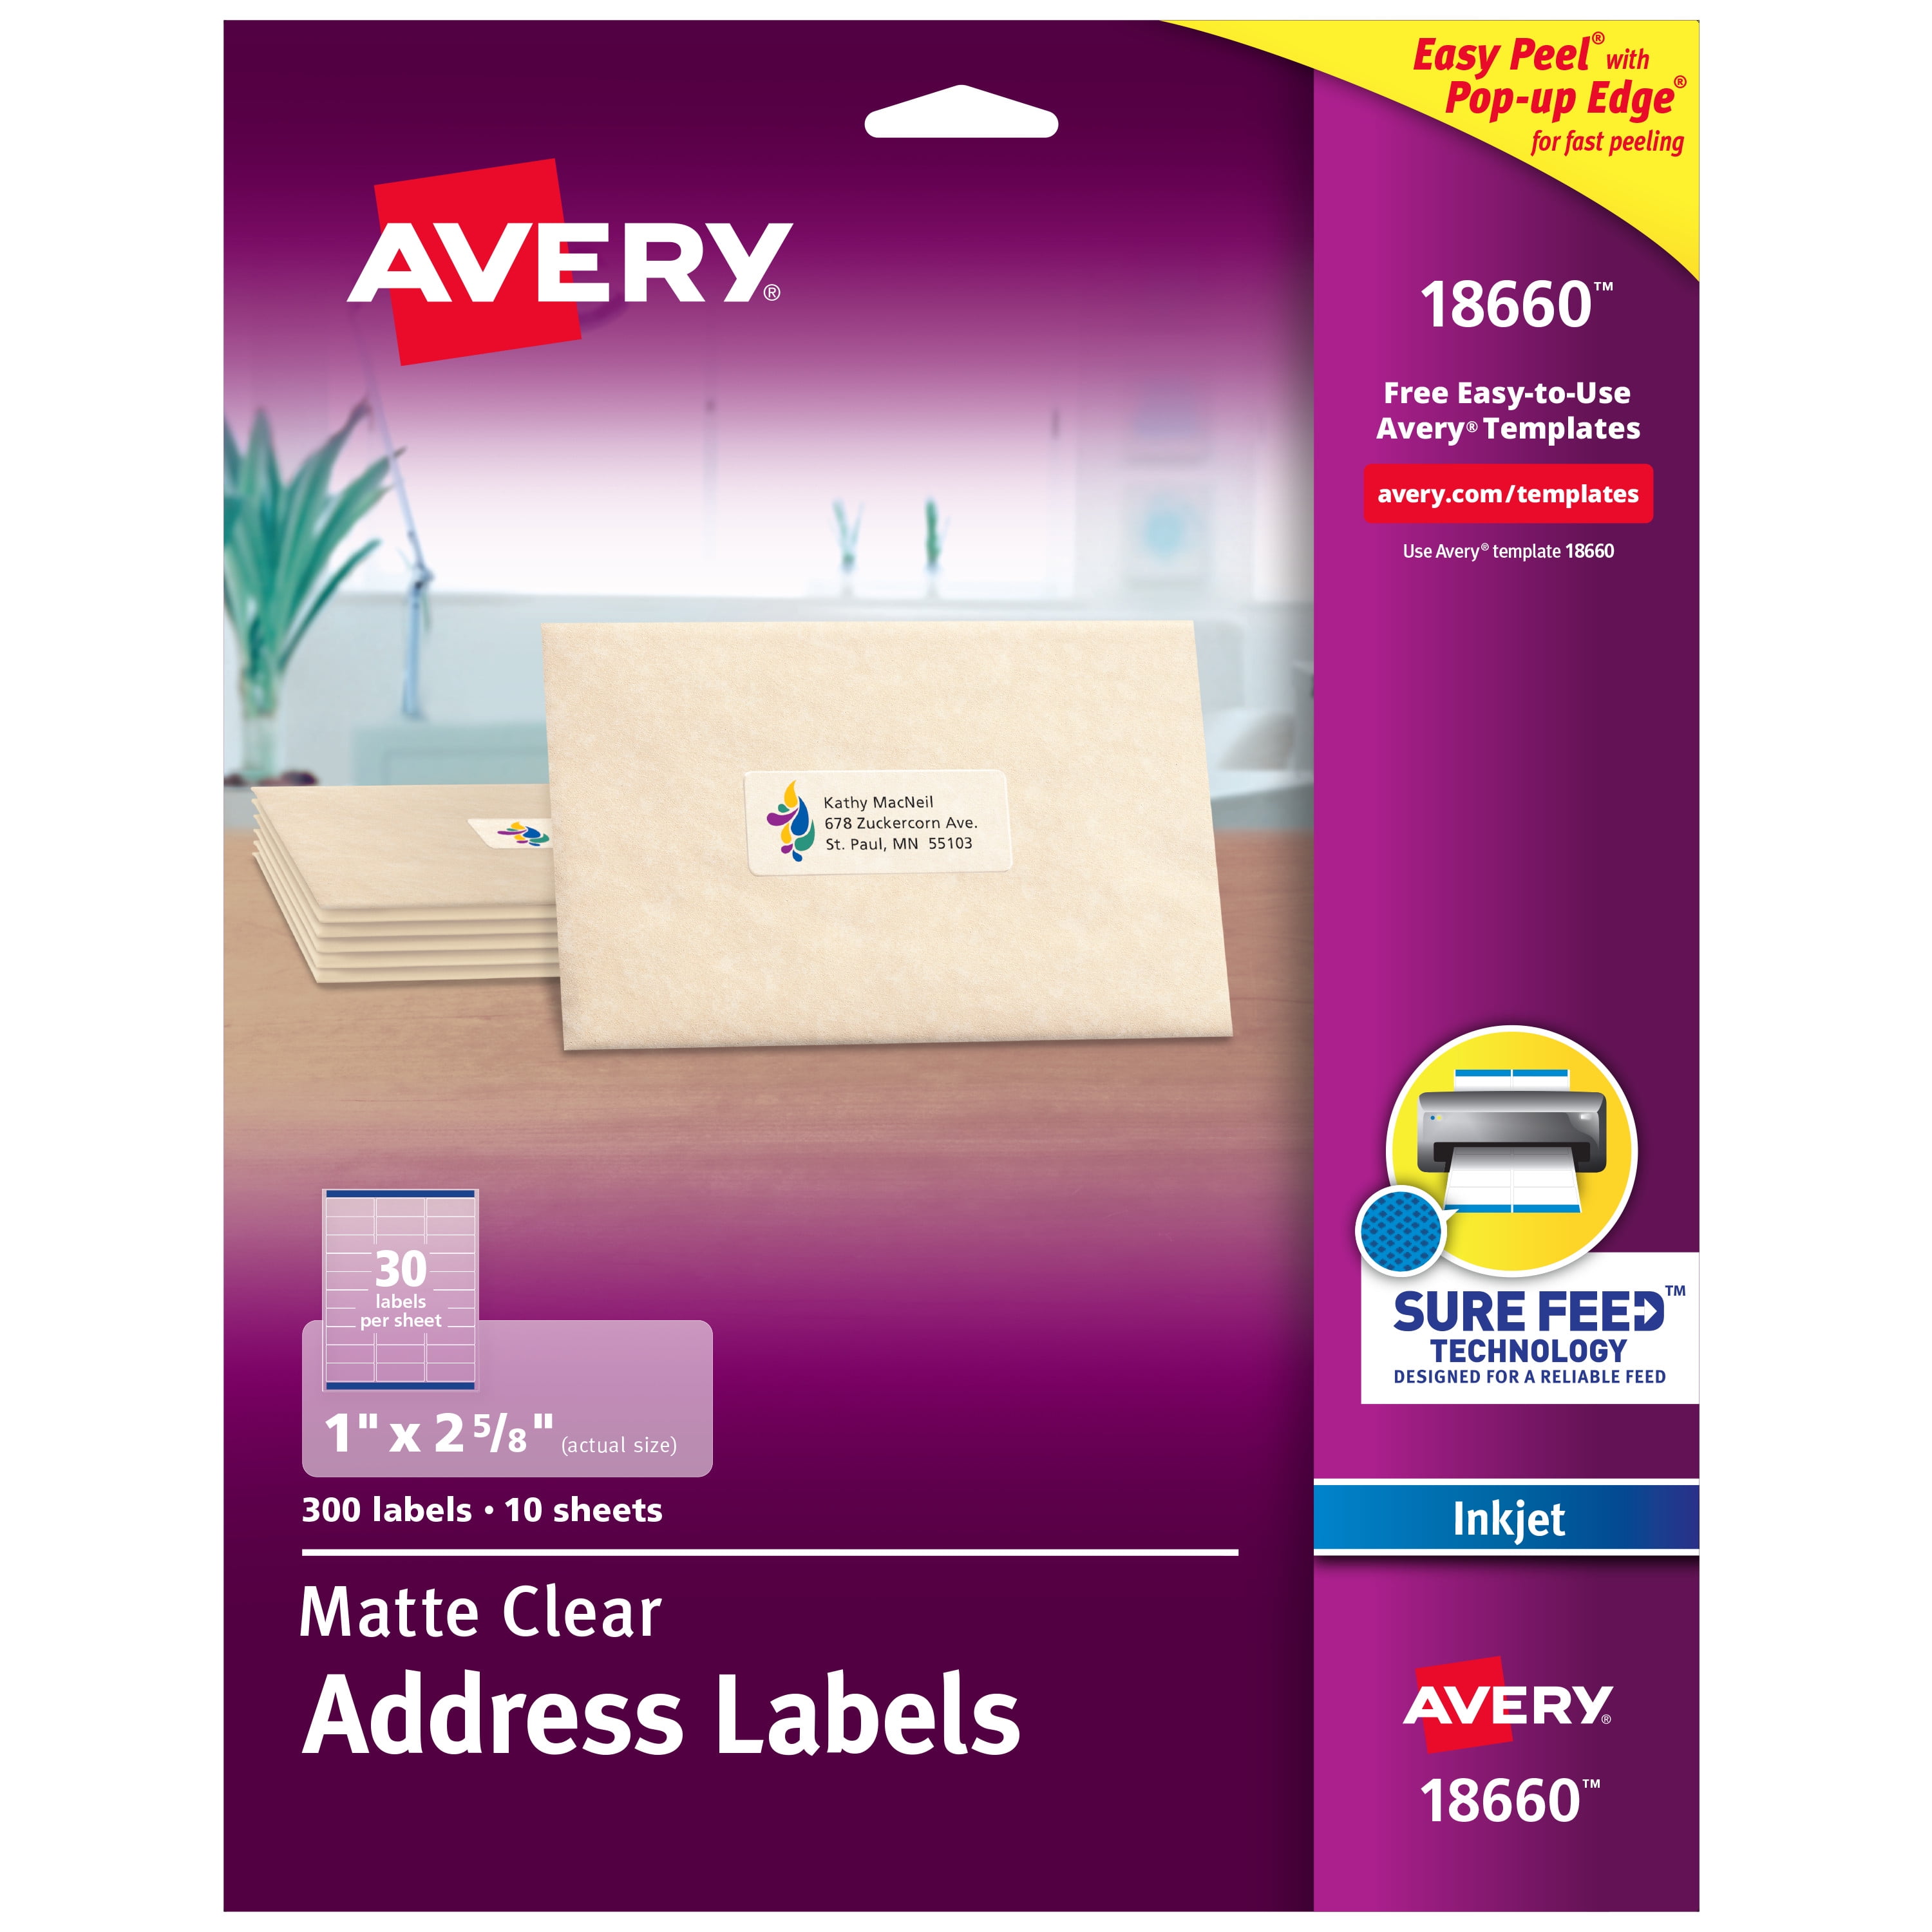 Avery Address Labels, 1" x 25/8", Easy Peel, Matte Clear, 300 Labels